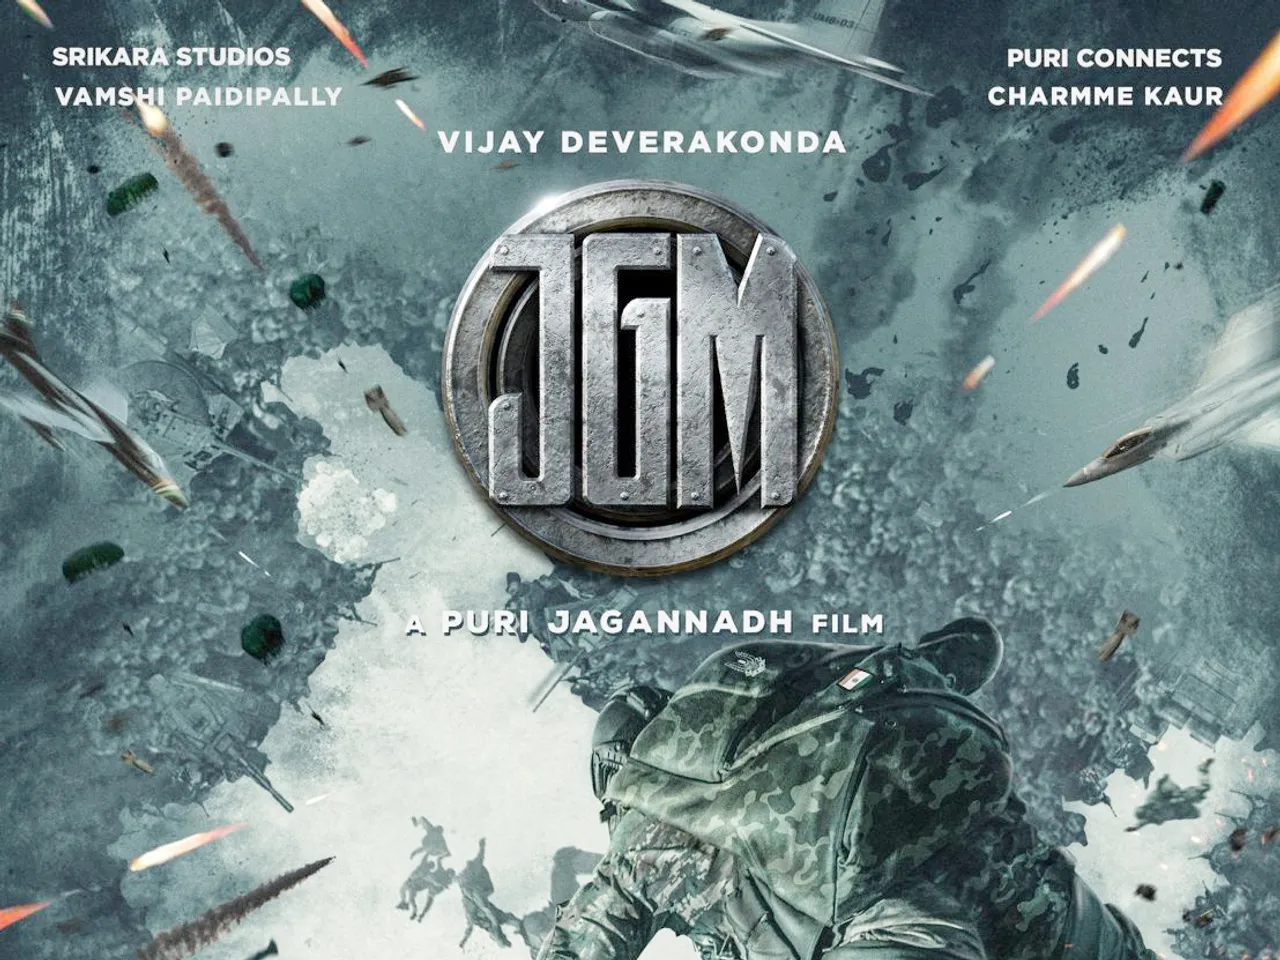 Super star Vijay Deverakonda and Director Puri Jagannadh present ‘JGM’, a massive action drama